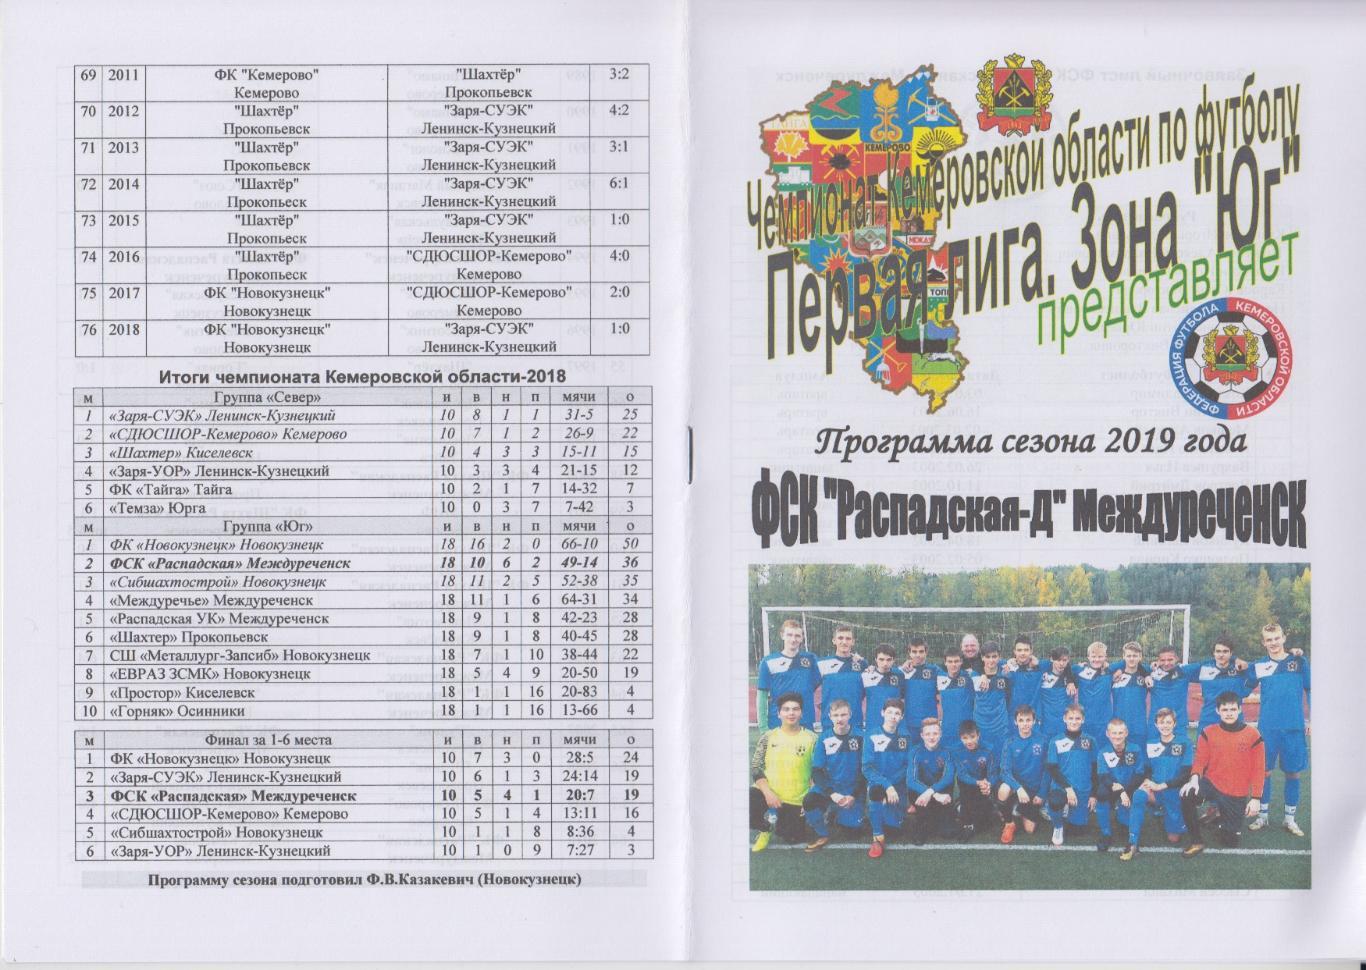 Буклет Программа сезона ФСК Распадская-Д(Междуреченск) - 2019